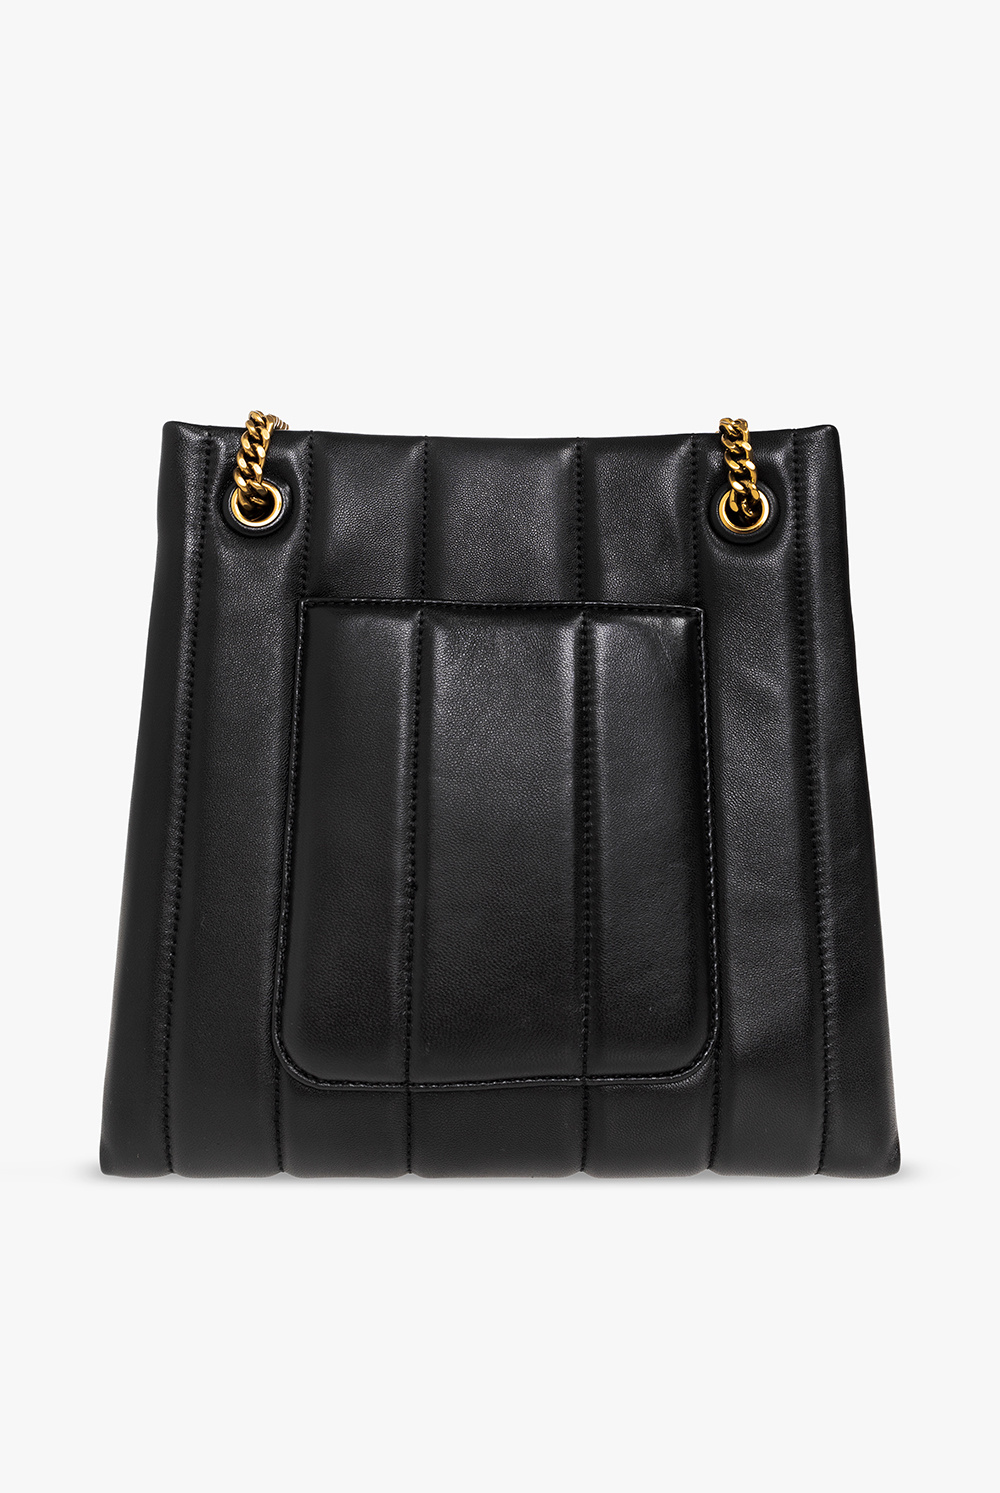 Prada Saffiano Cuir Front Zip Pocket Briefcase Work Bag Travel BLACK  Preowned